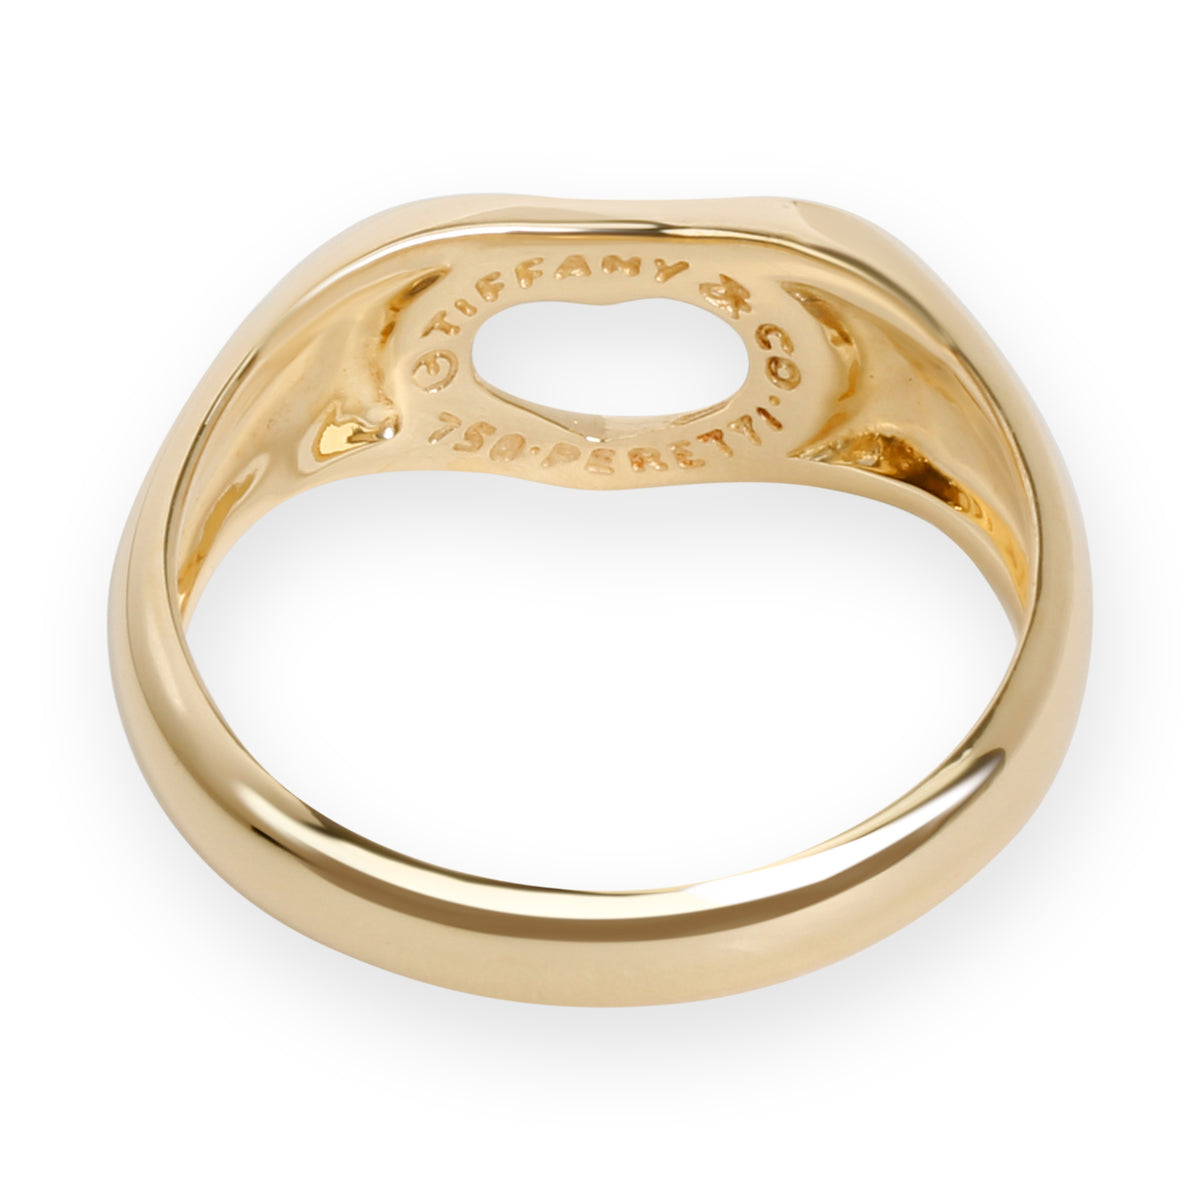 Tiffany & Co. Open Heart Signet Ring in 18K Yellow Gold